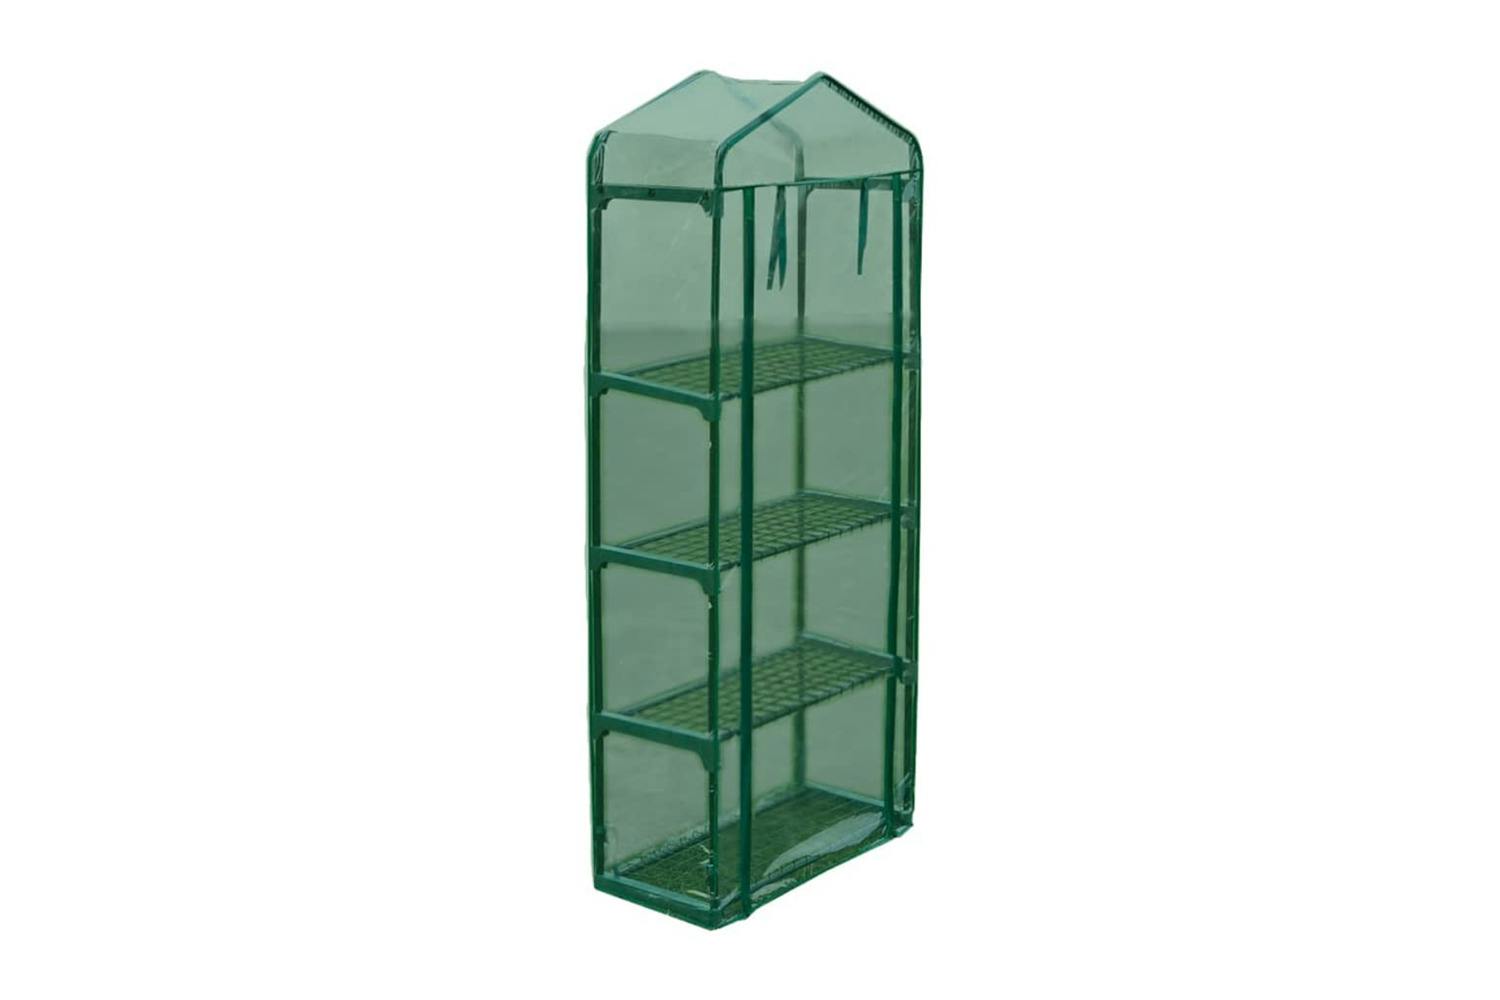 Vidaxl 40619 Greenhouse With 4 Shelves